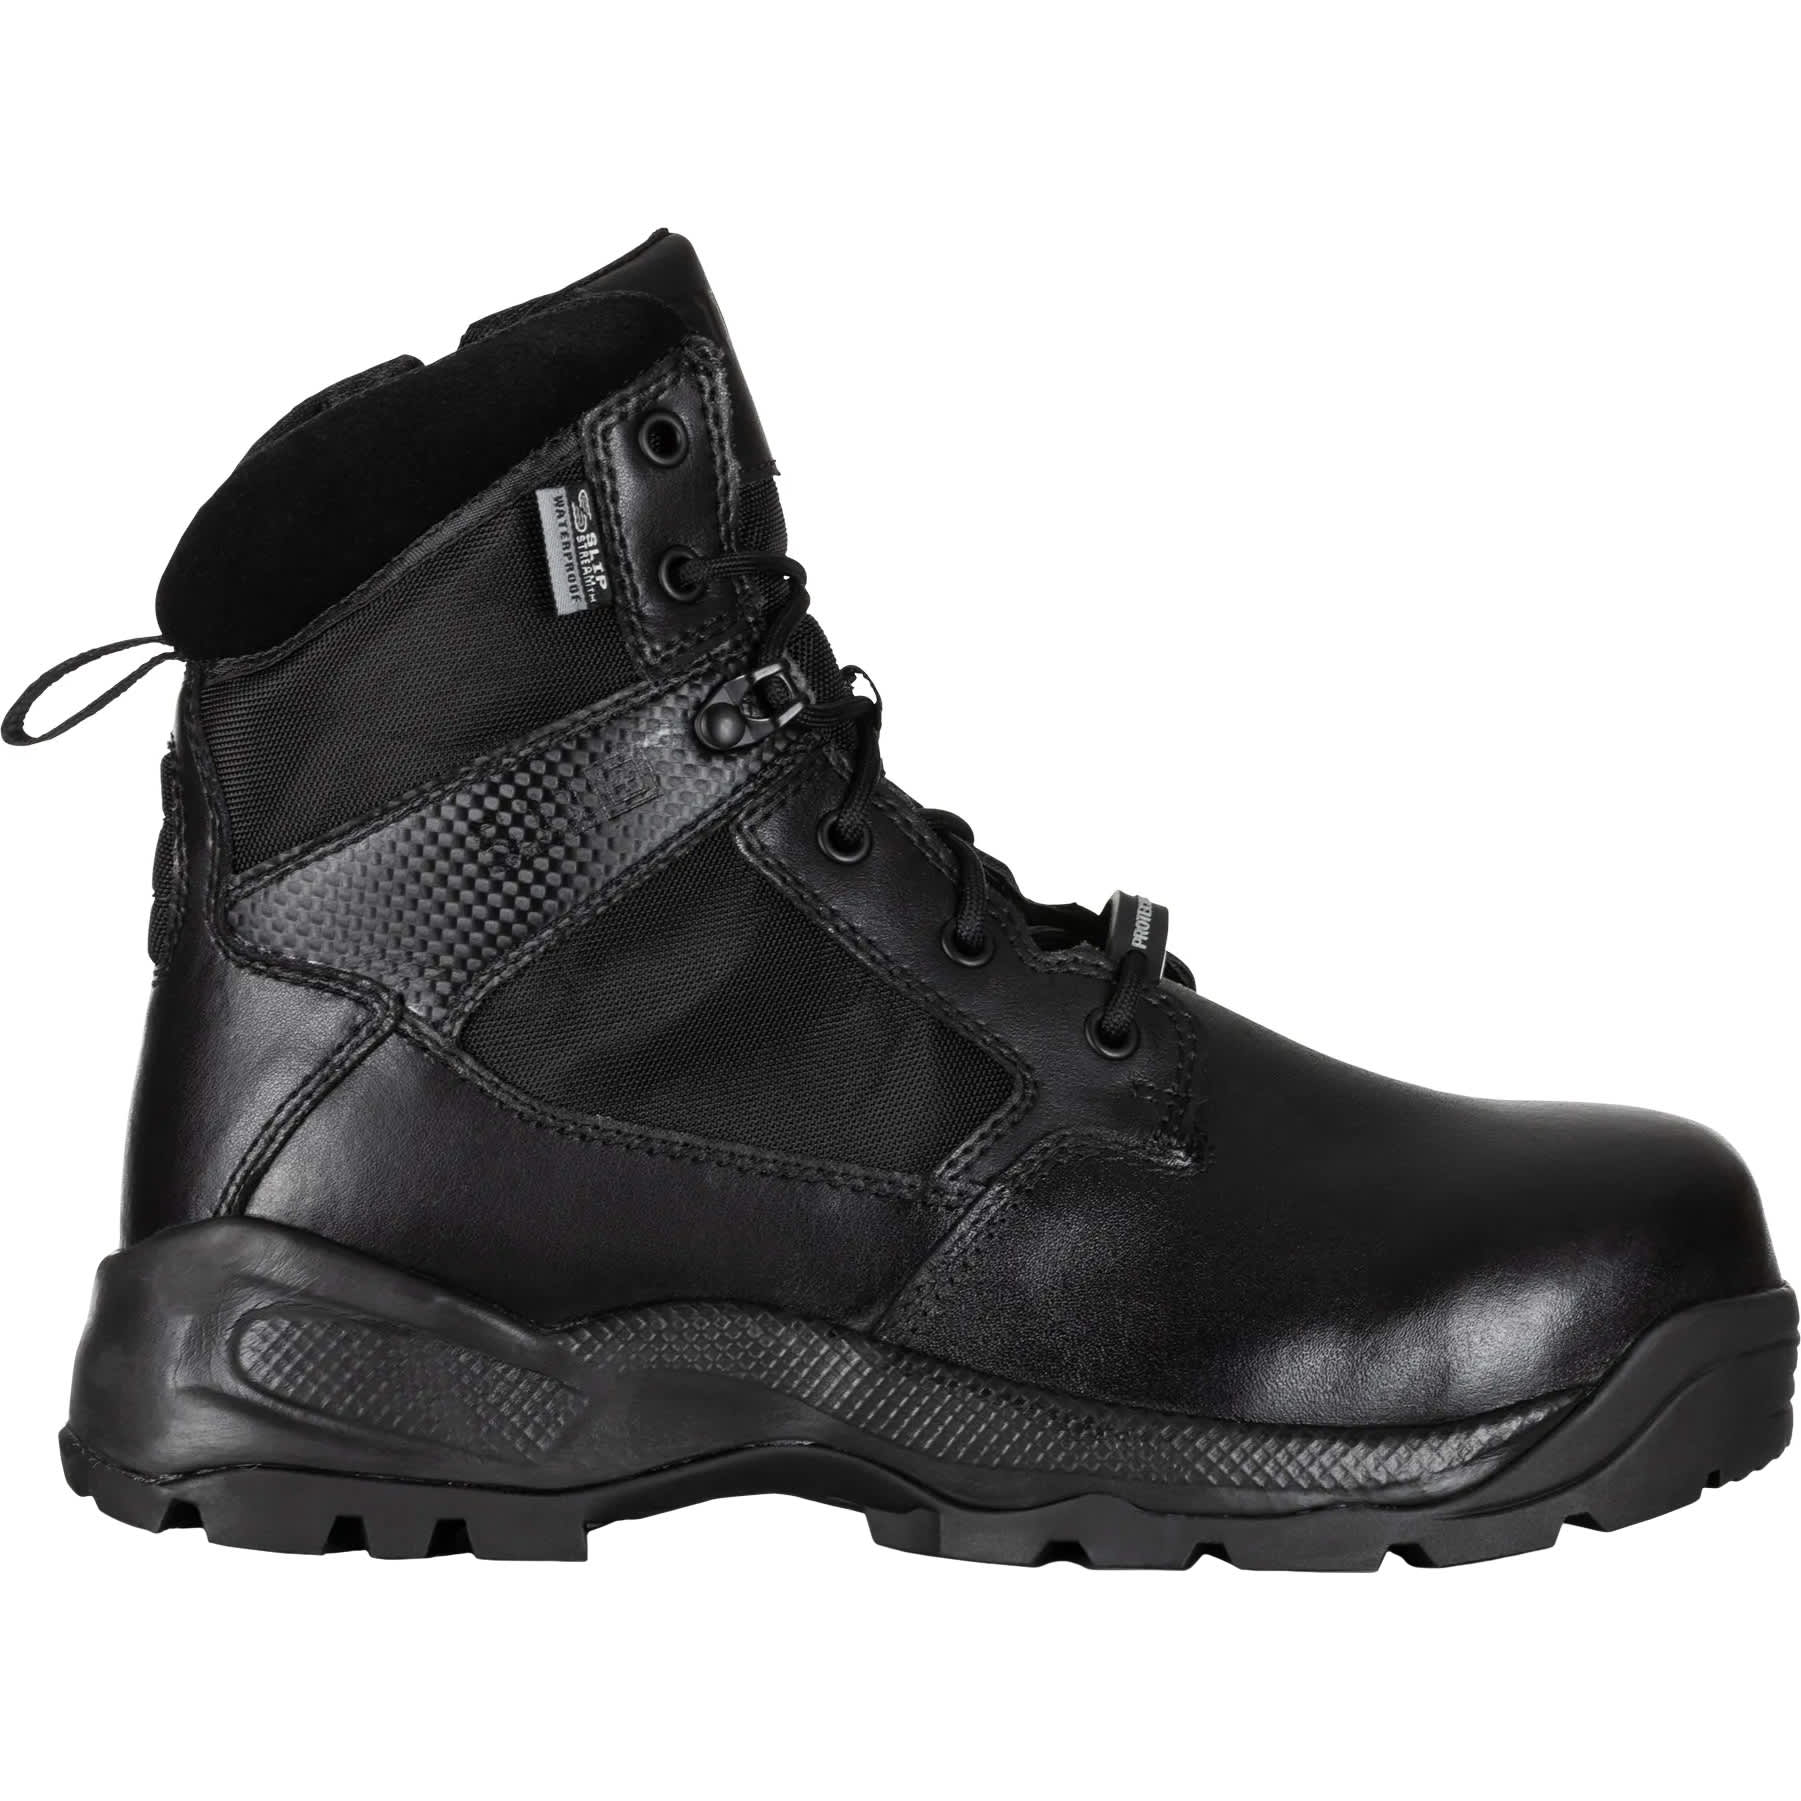 Under Armour Micro G Valsetz Zip Mid Hiking Shoes Black